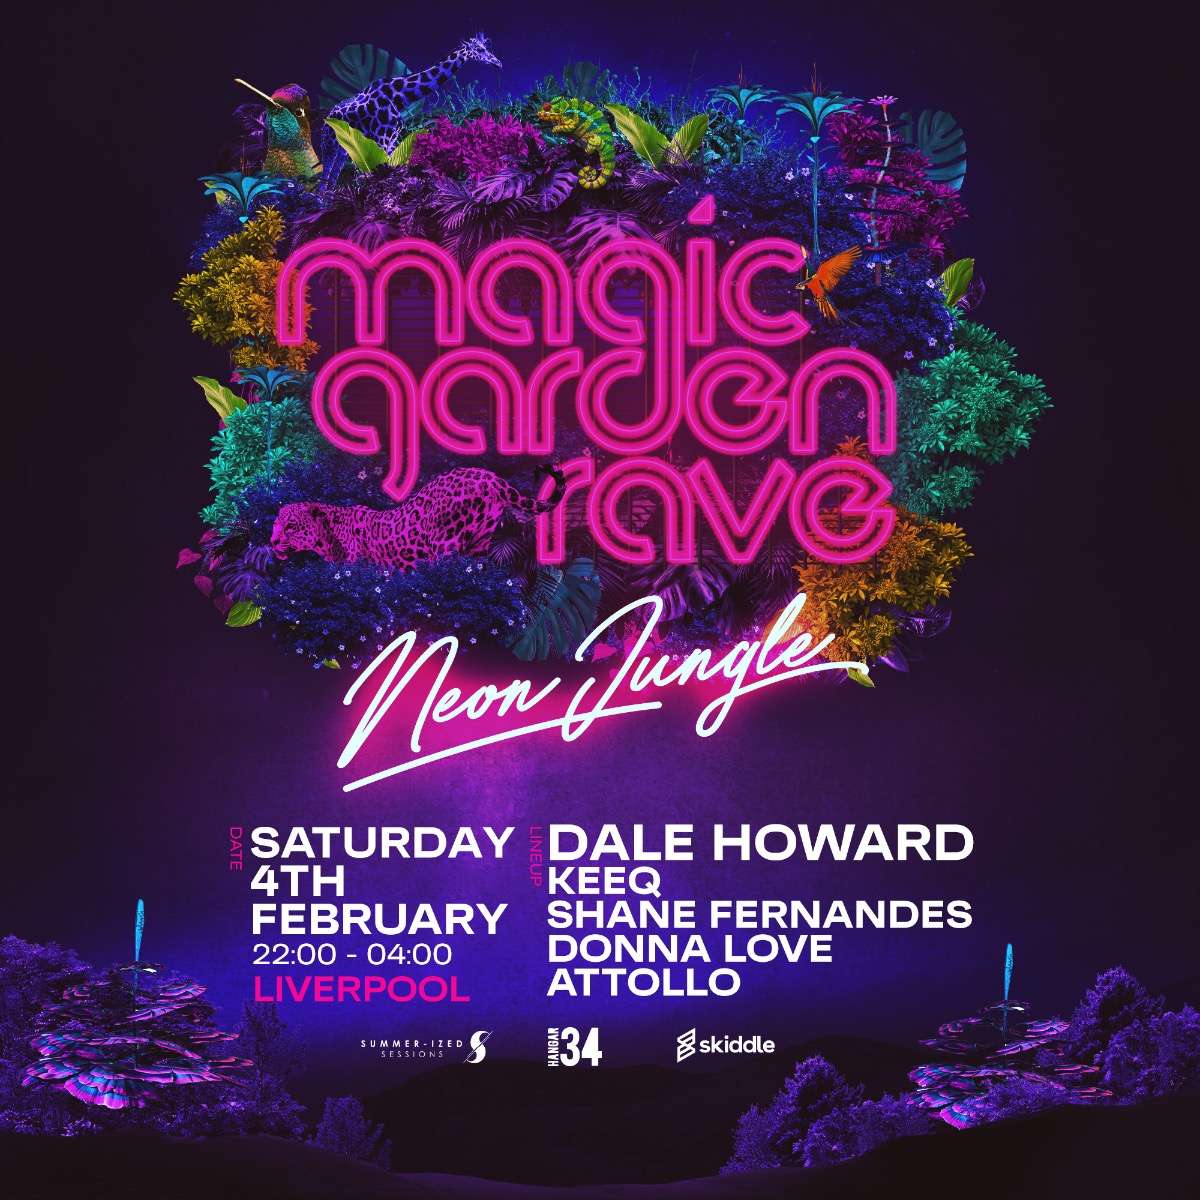 Magic Garden Rave | Neon Jungle (Liverpool)